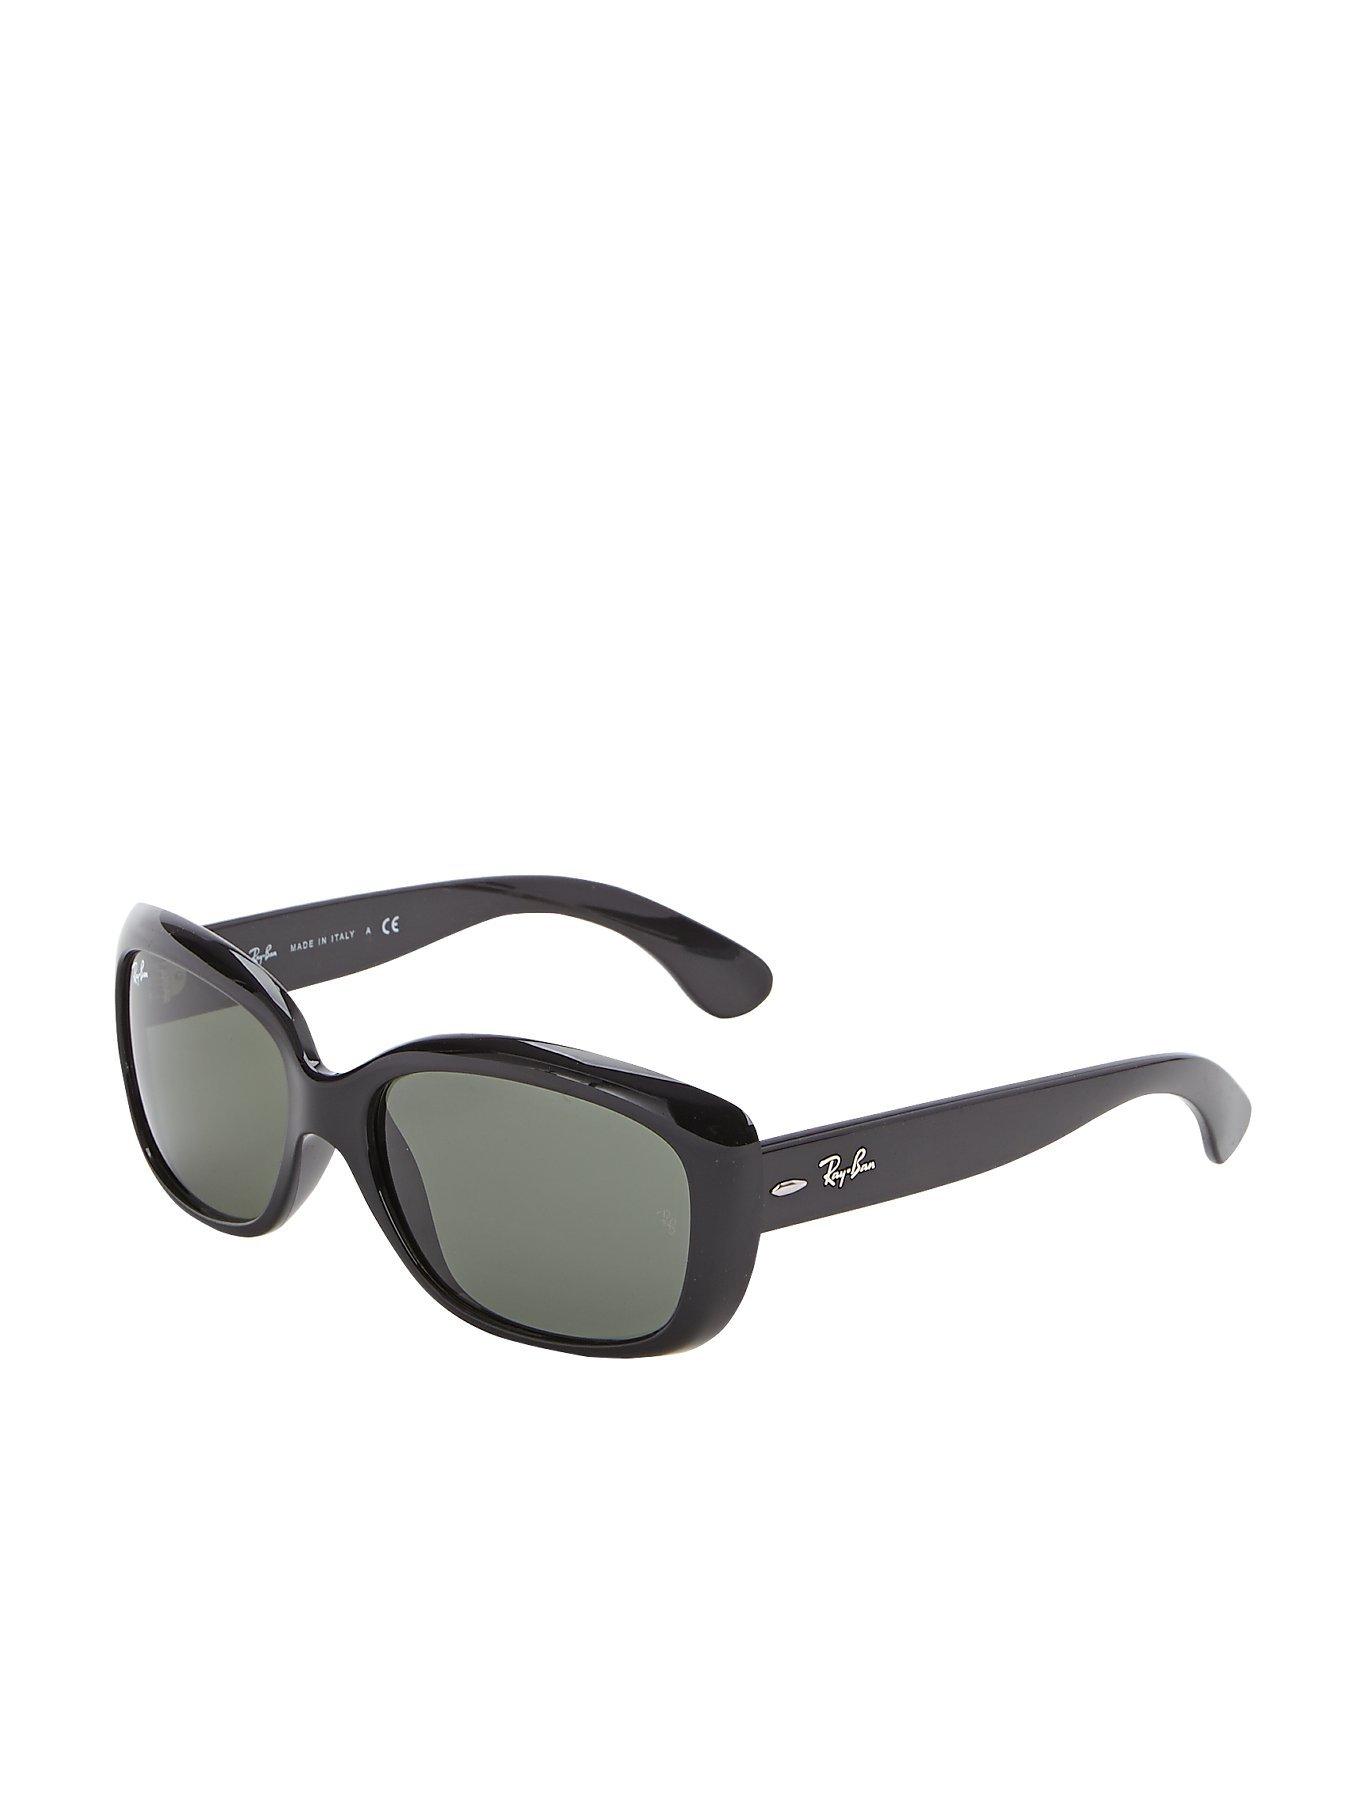 Black Sunglasses Accessories Women Www - roblox thick rimmed glasses code